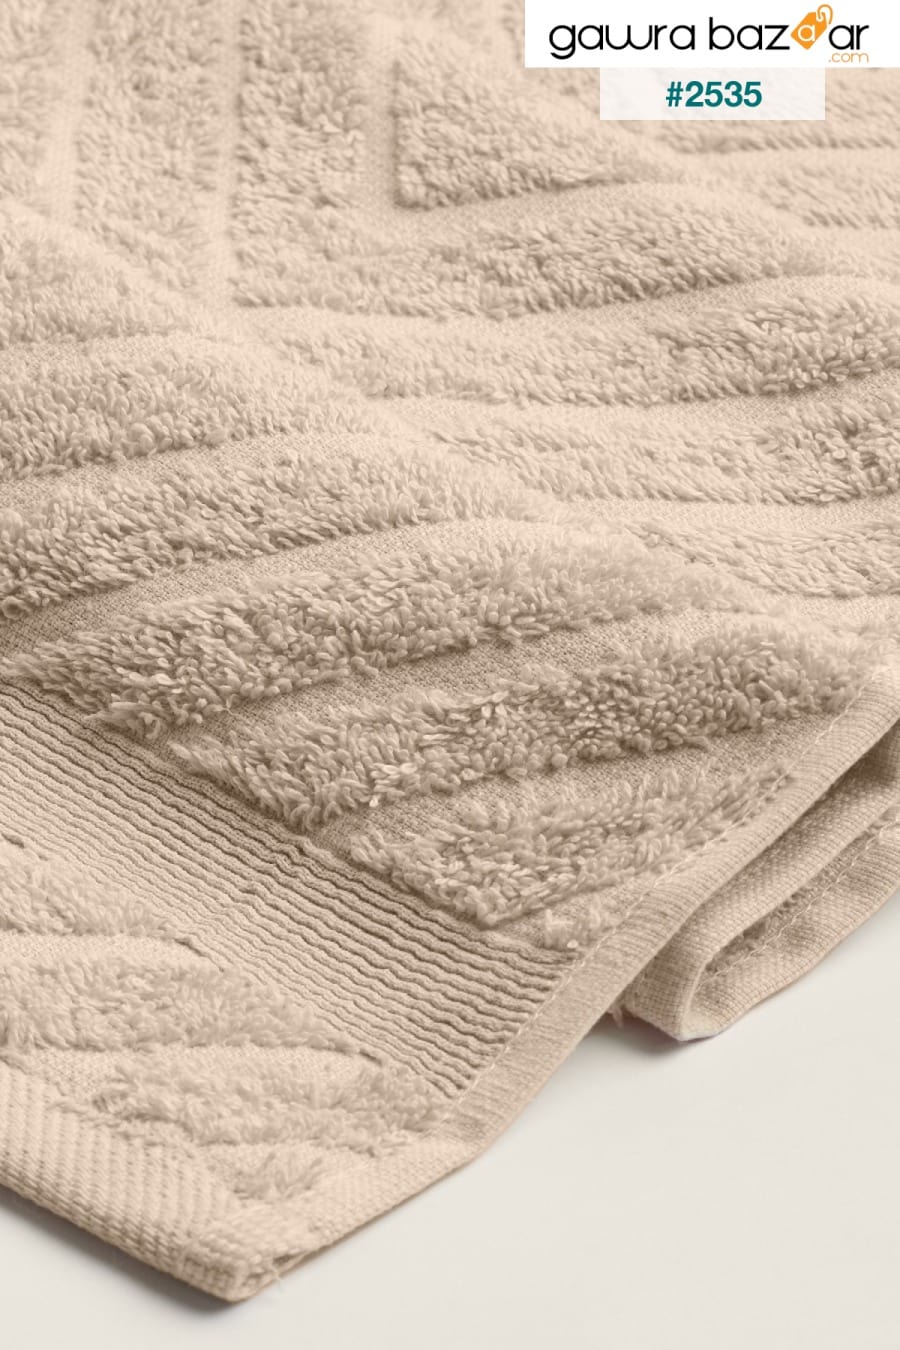 Lycian Jacquard Border Herringbone 4 Pcs Hand Face Towel Set 100٪ Cotton Soft Use Daily Use 1023a Koza Home 4